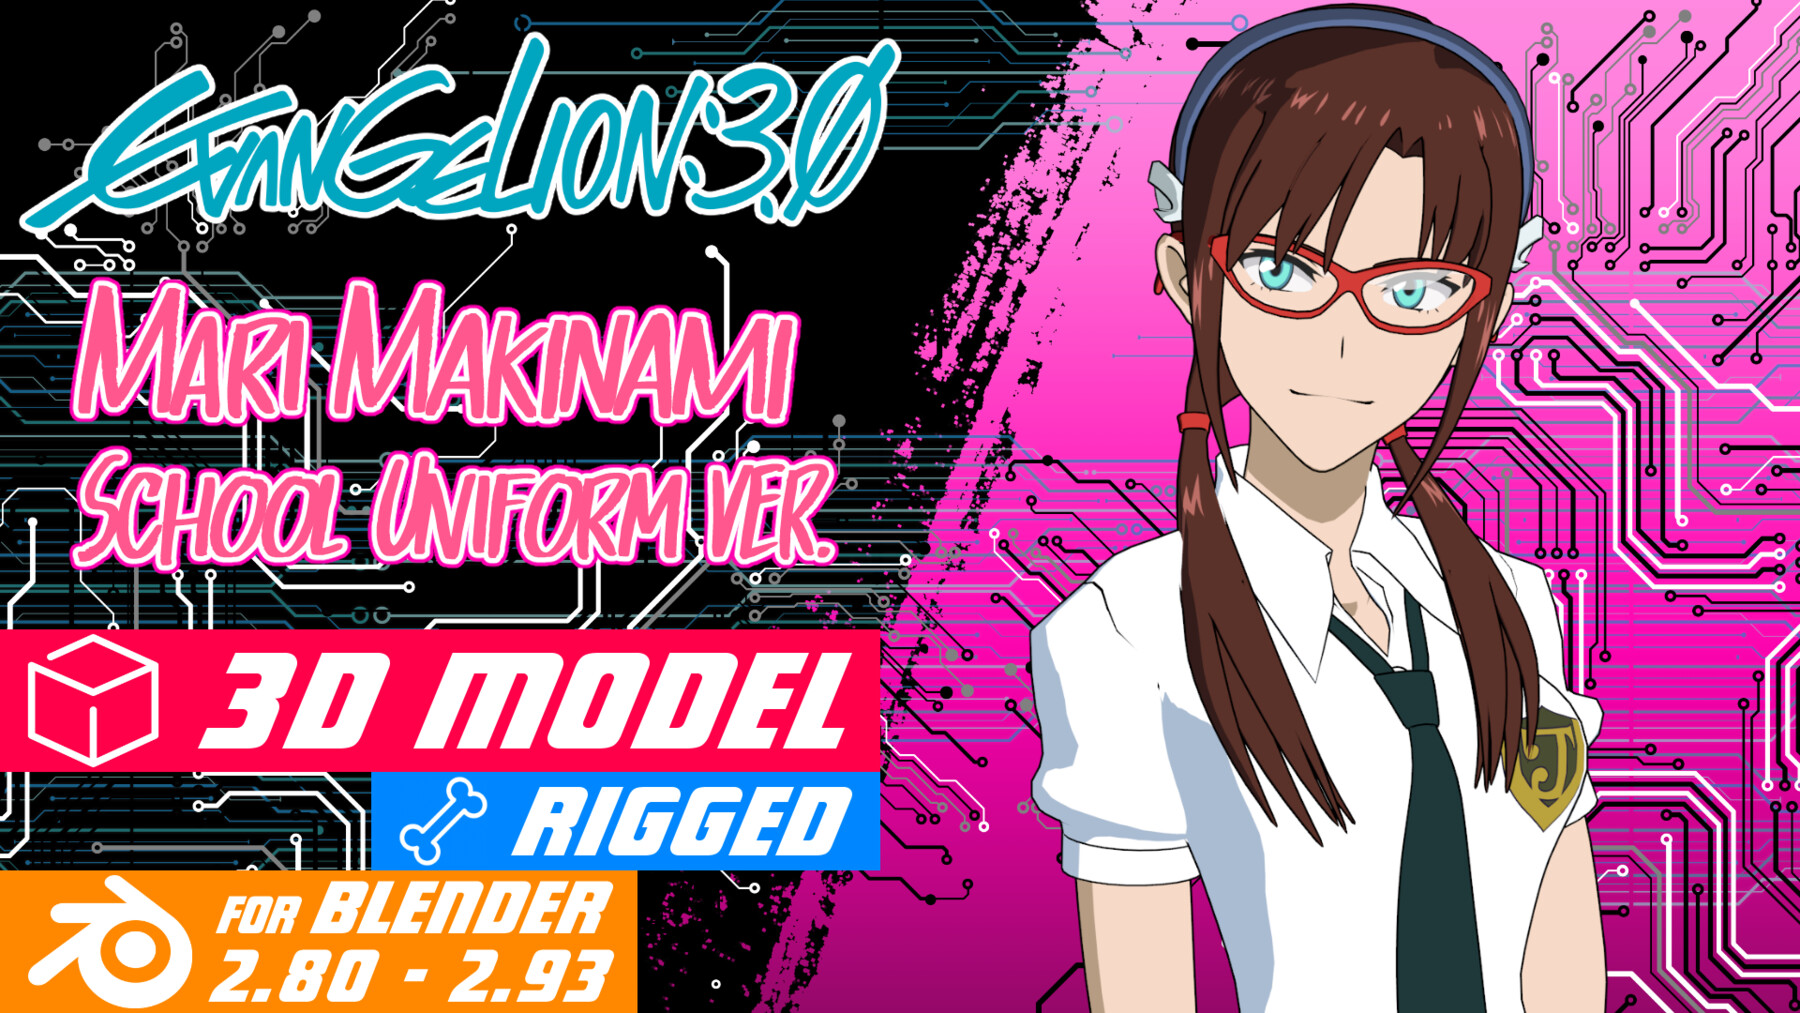 ArtStation - Mari Makinami Illustrious (School Uniform ver.) - Evangelion  Anime - 3D Model Blender | Resources